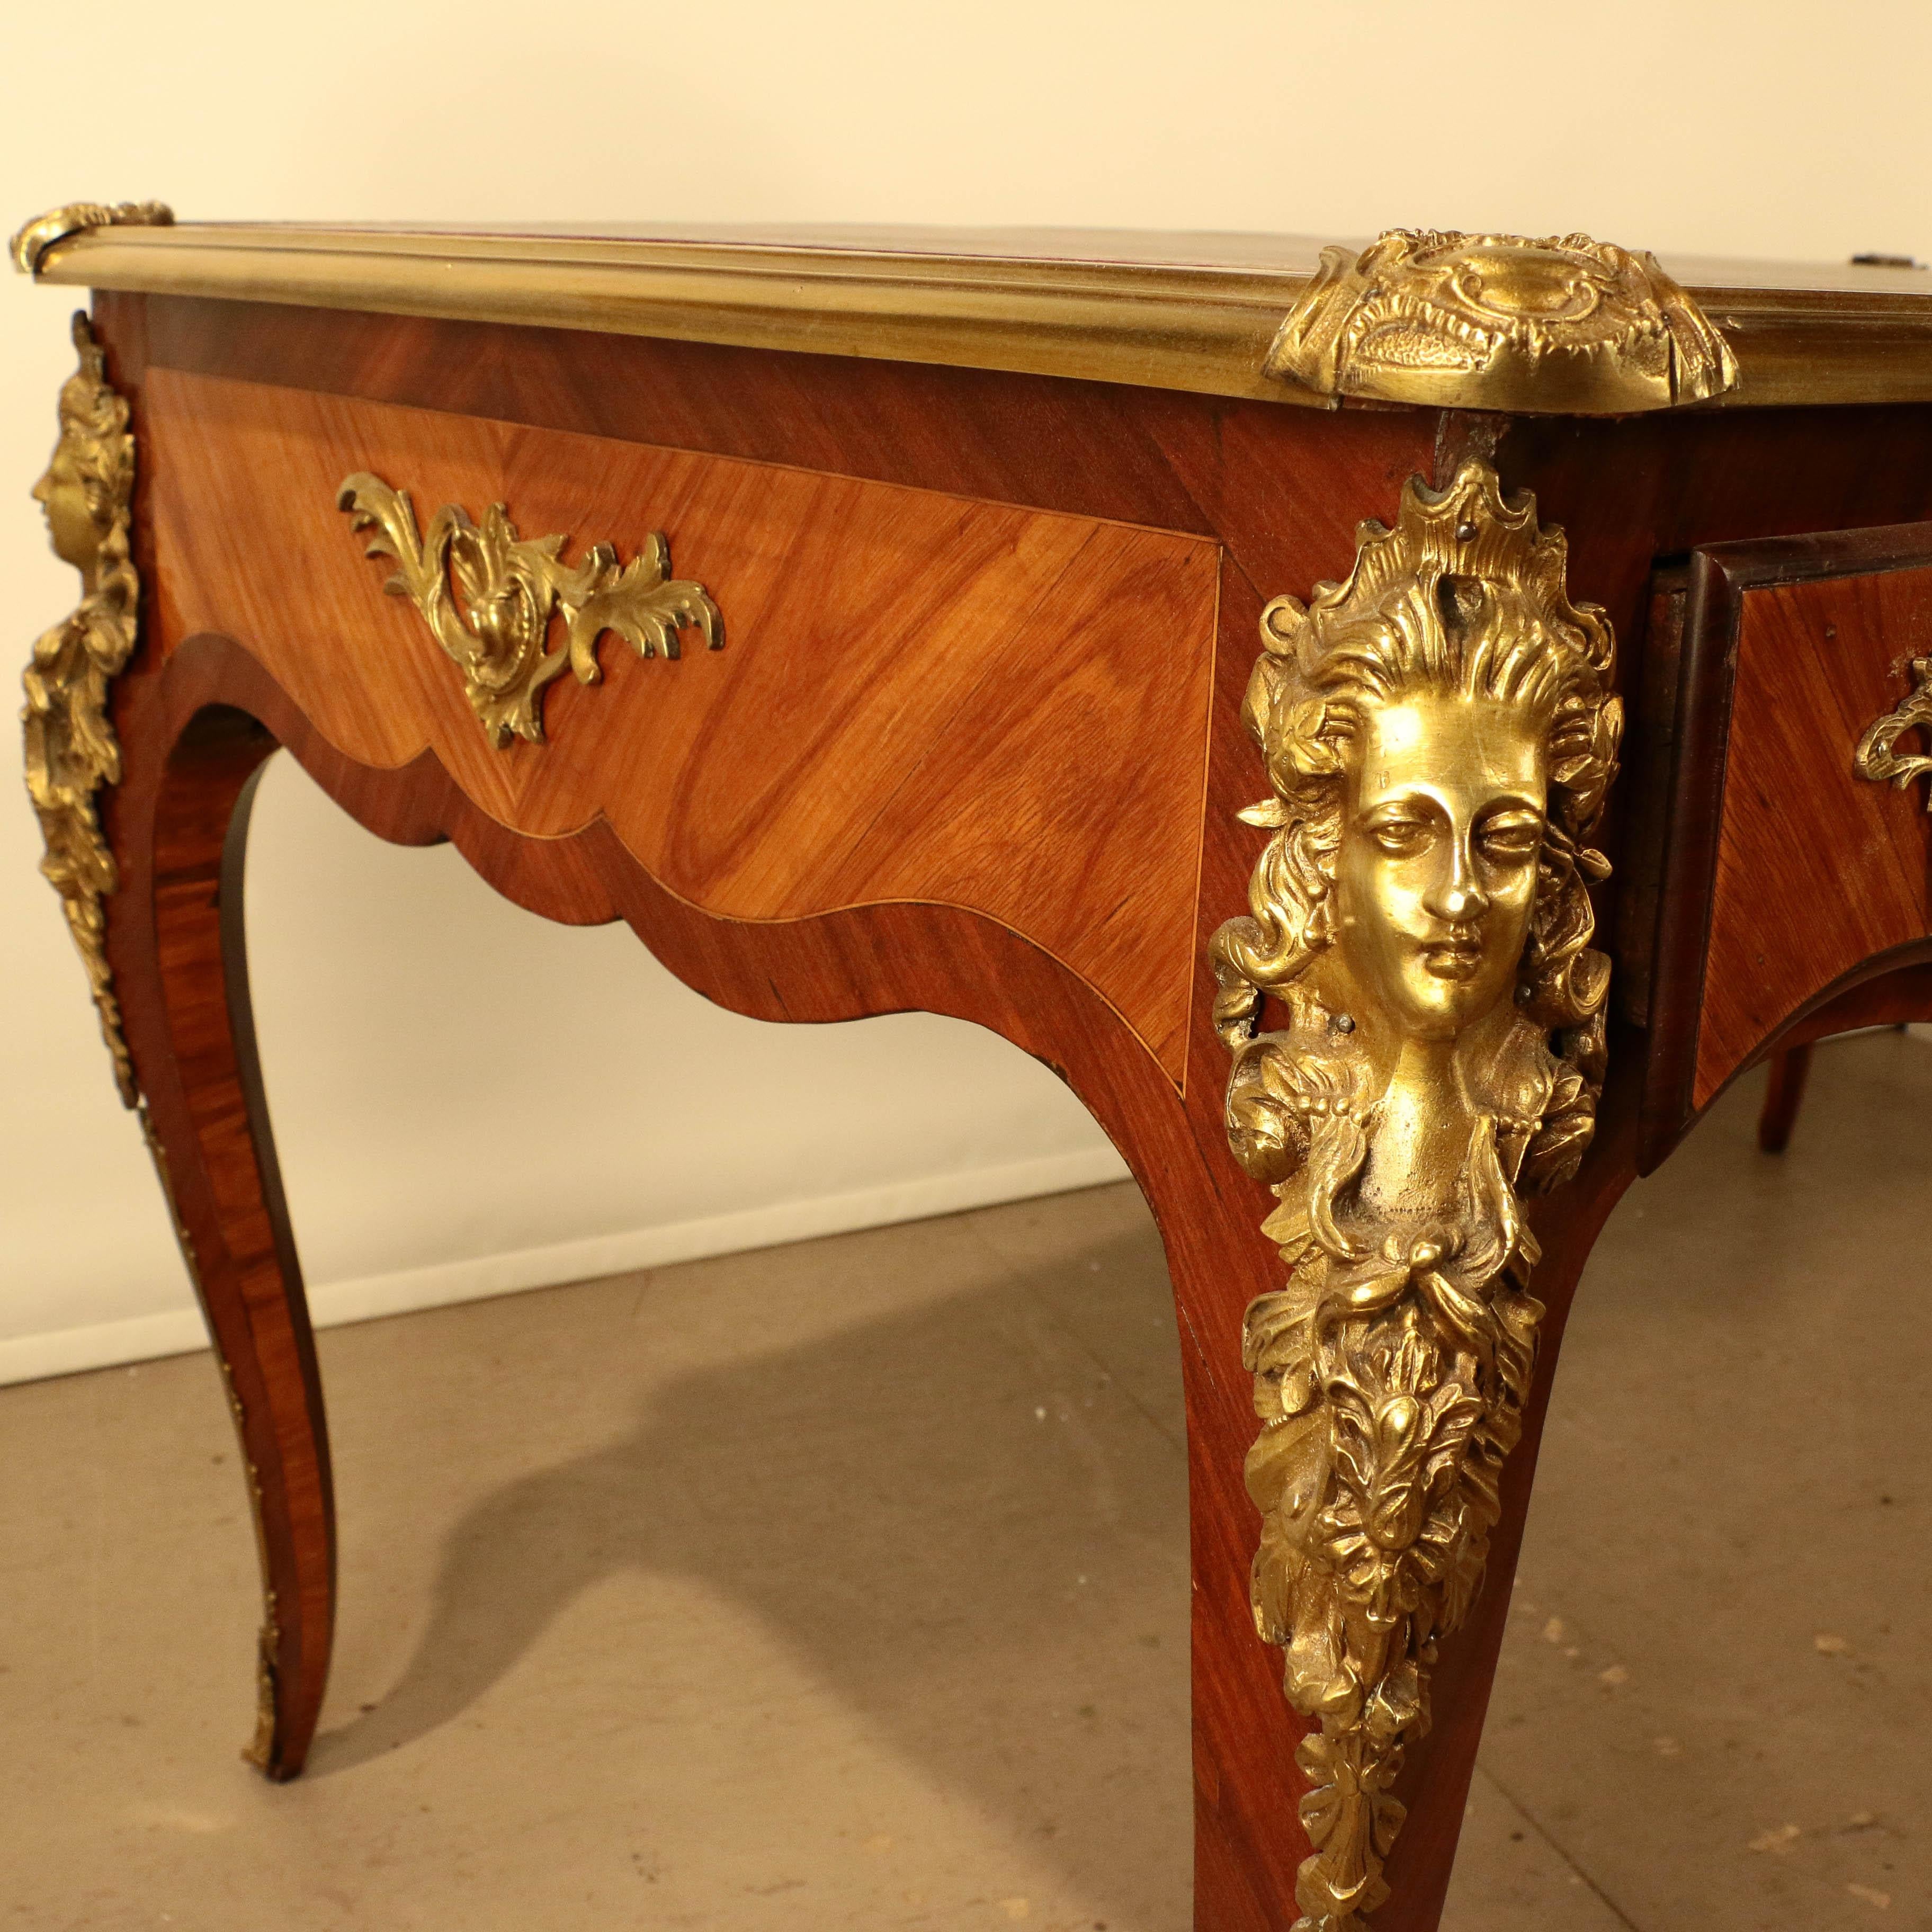 Hand-Crafted Antique Louis XV Style Kingwood Bureau Plat